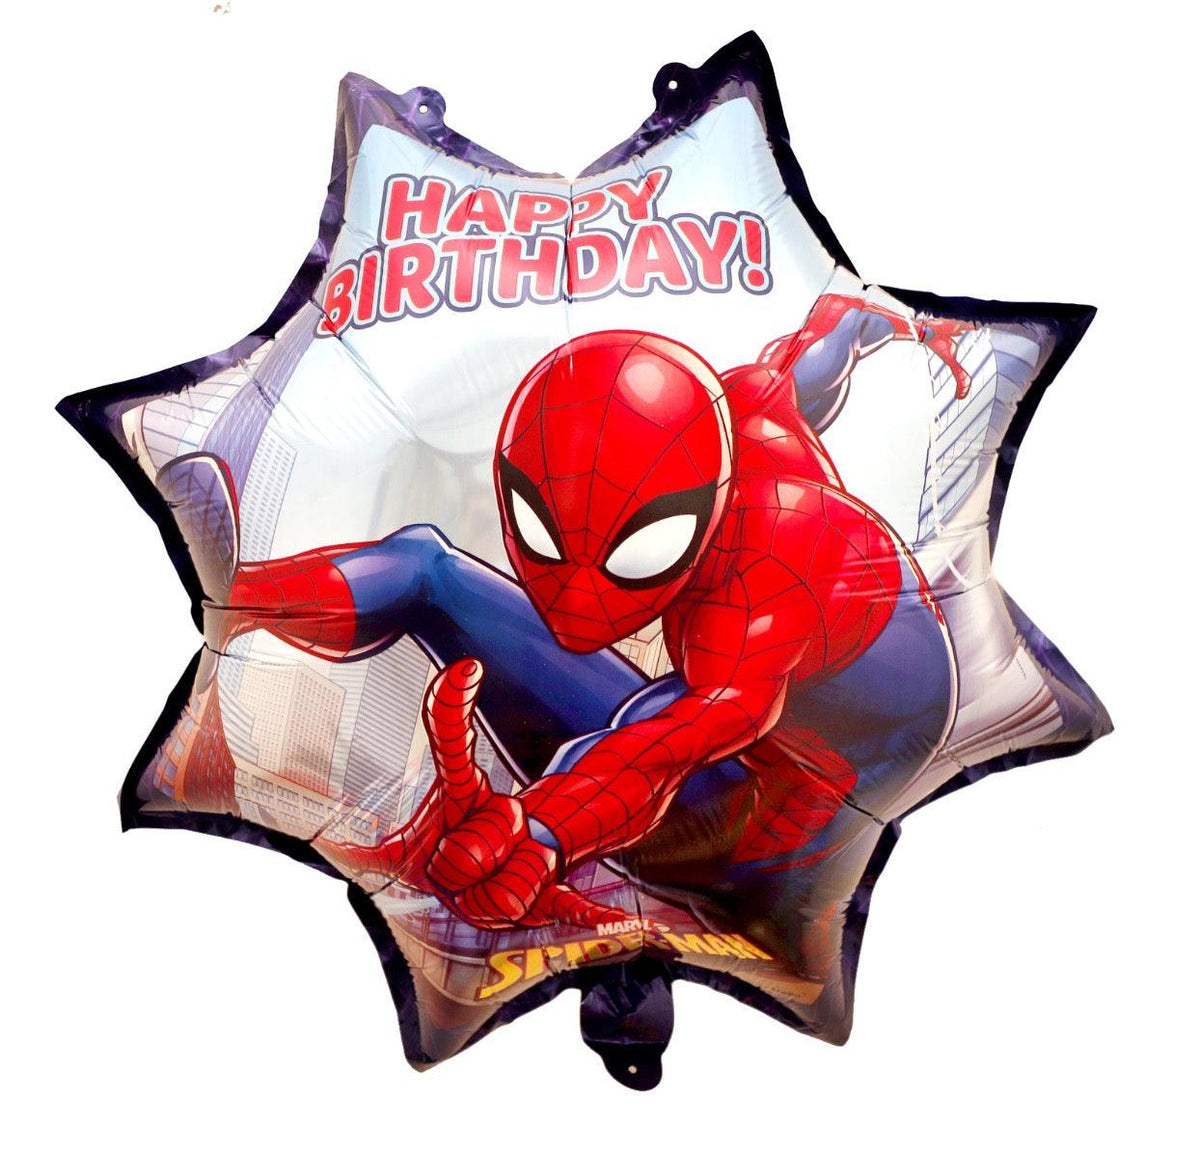 Marvel Happy Birthday Spider Man Foil Balloon, Pack of 1